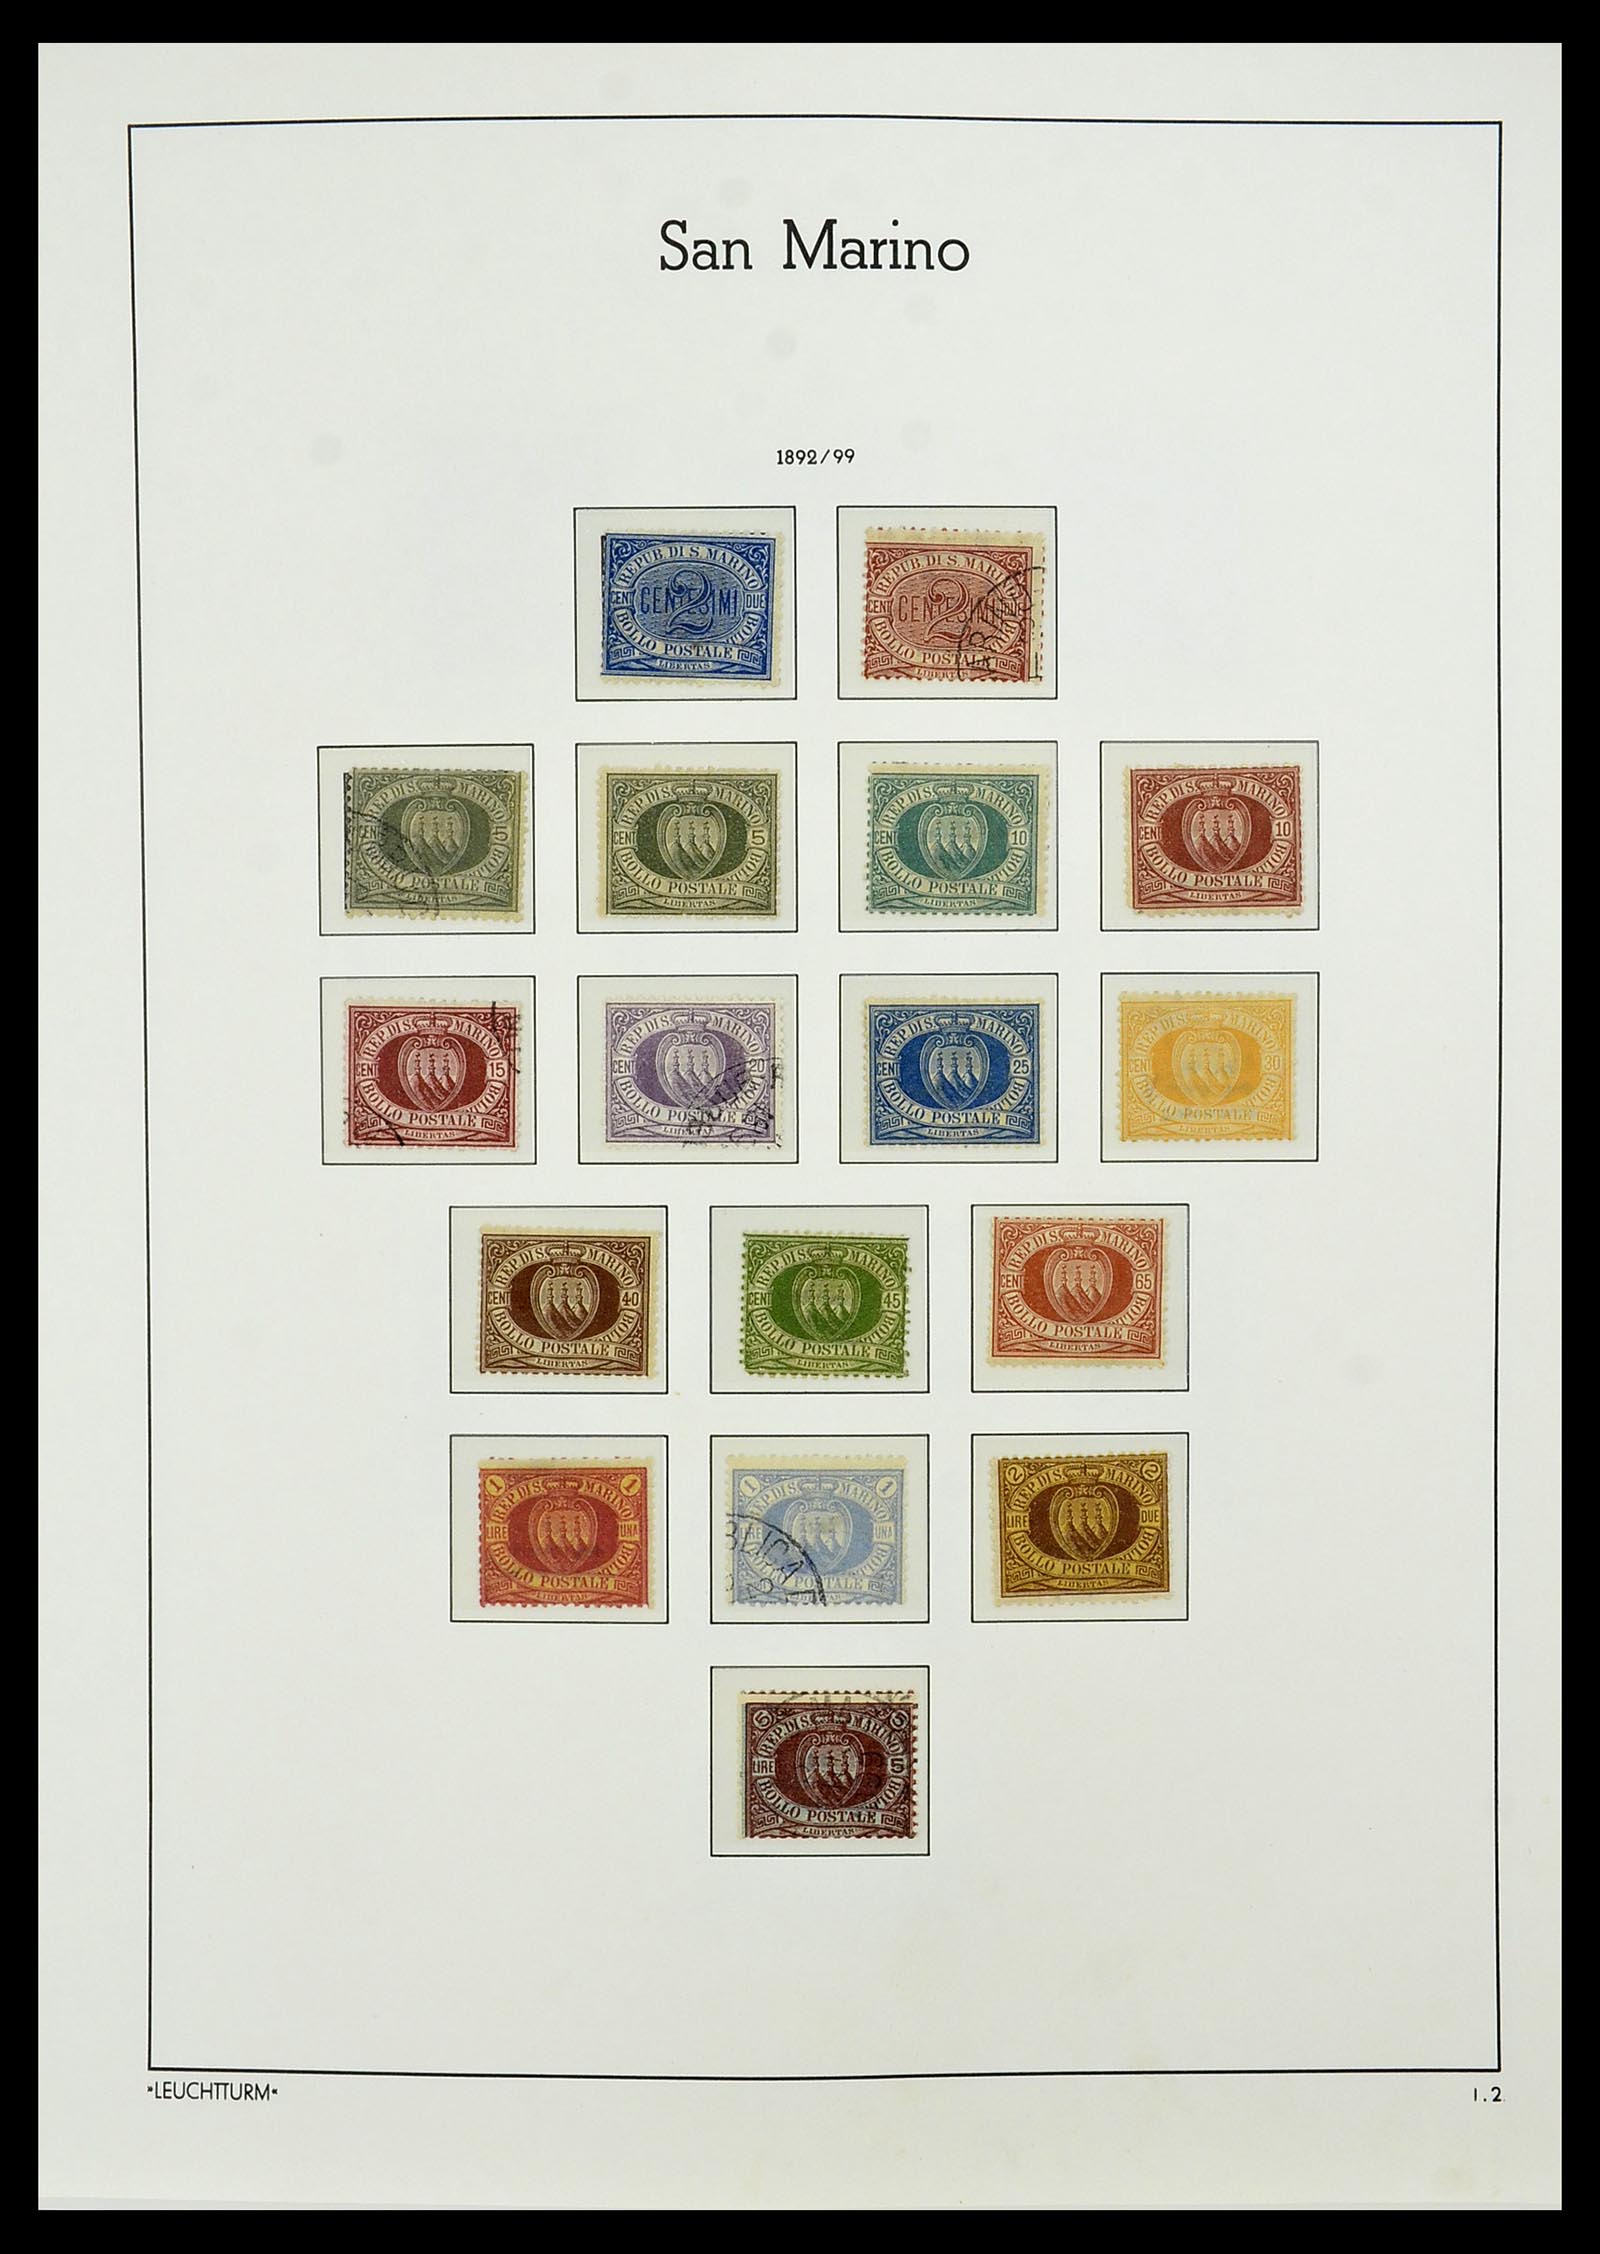 34243 002 - Stamp collection 34243 San Marino 1877-2008.